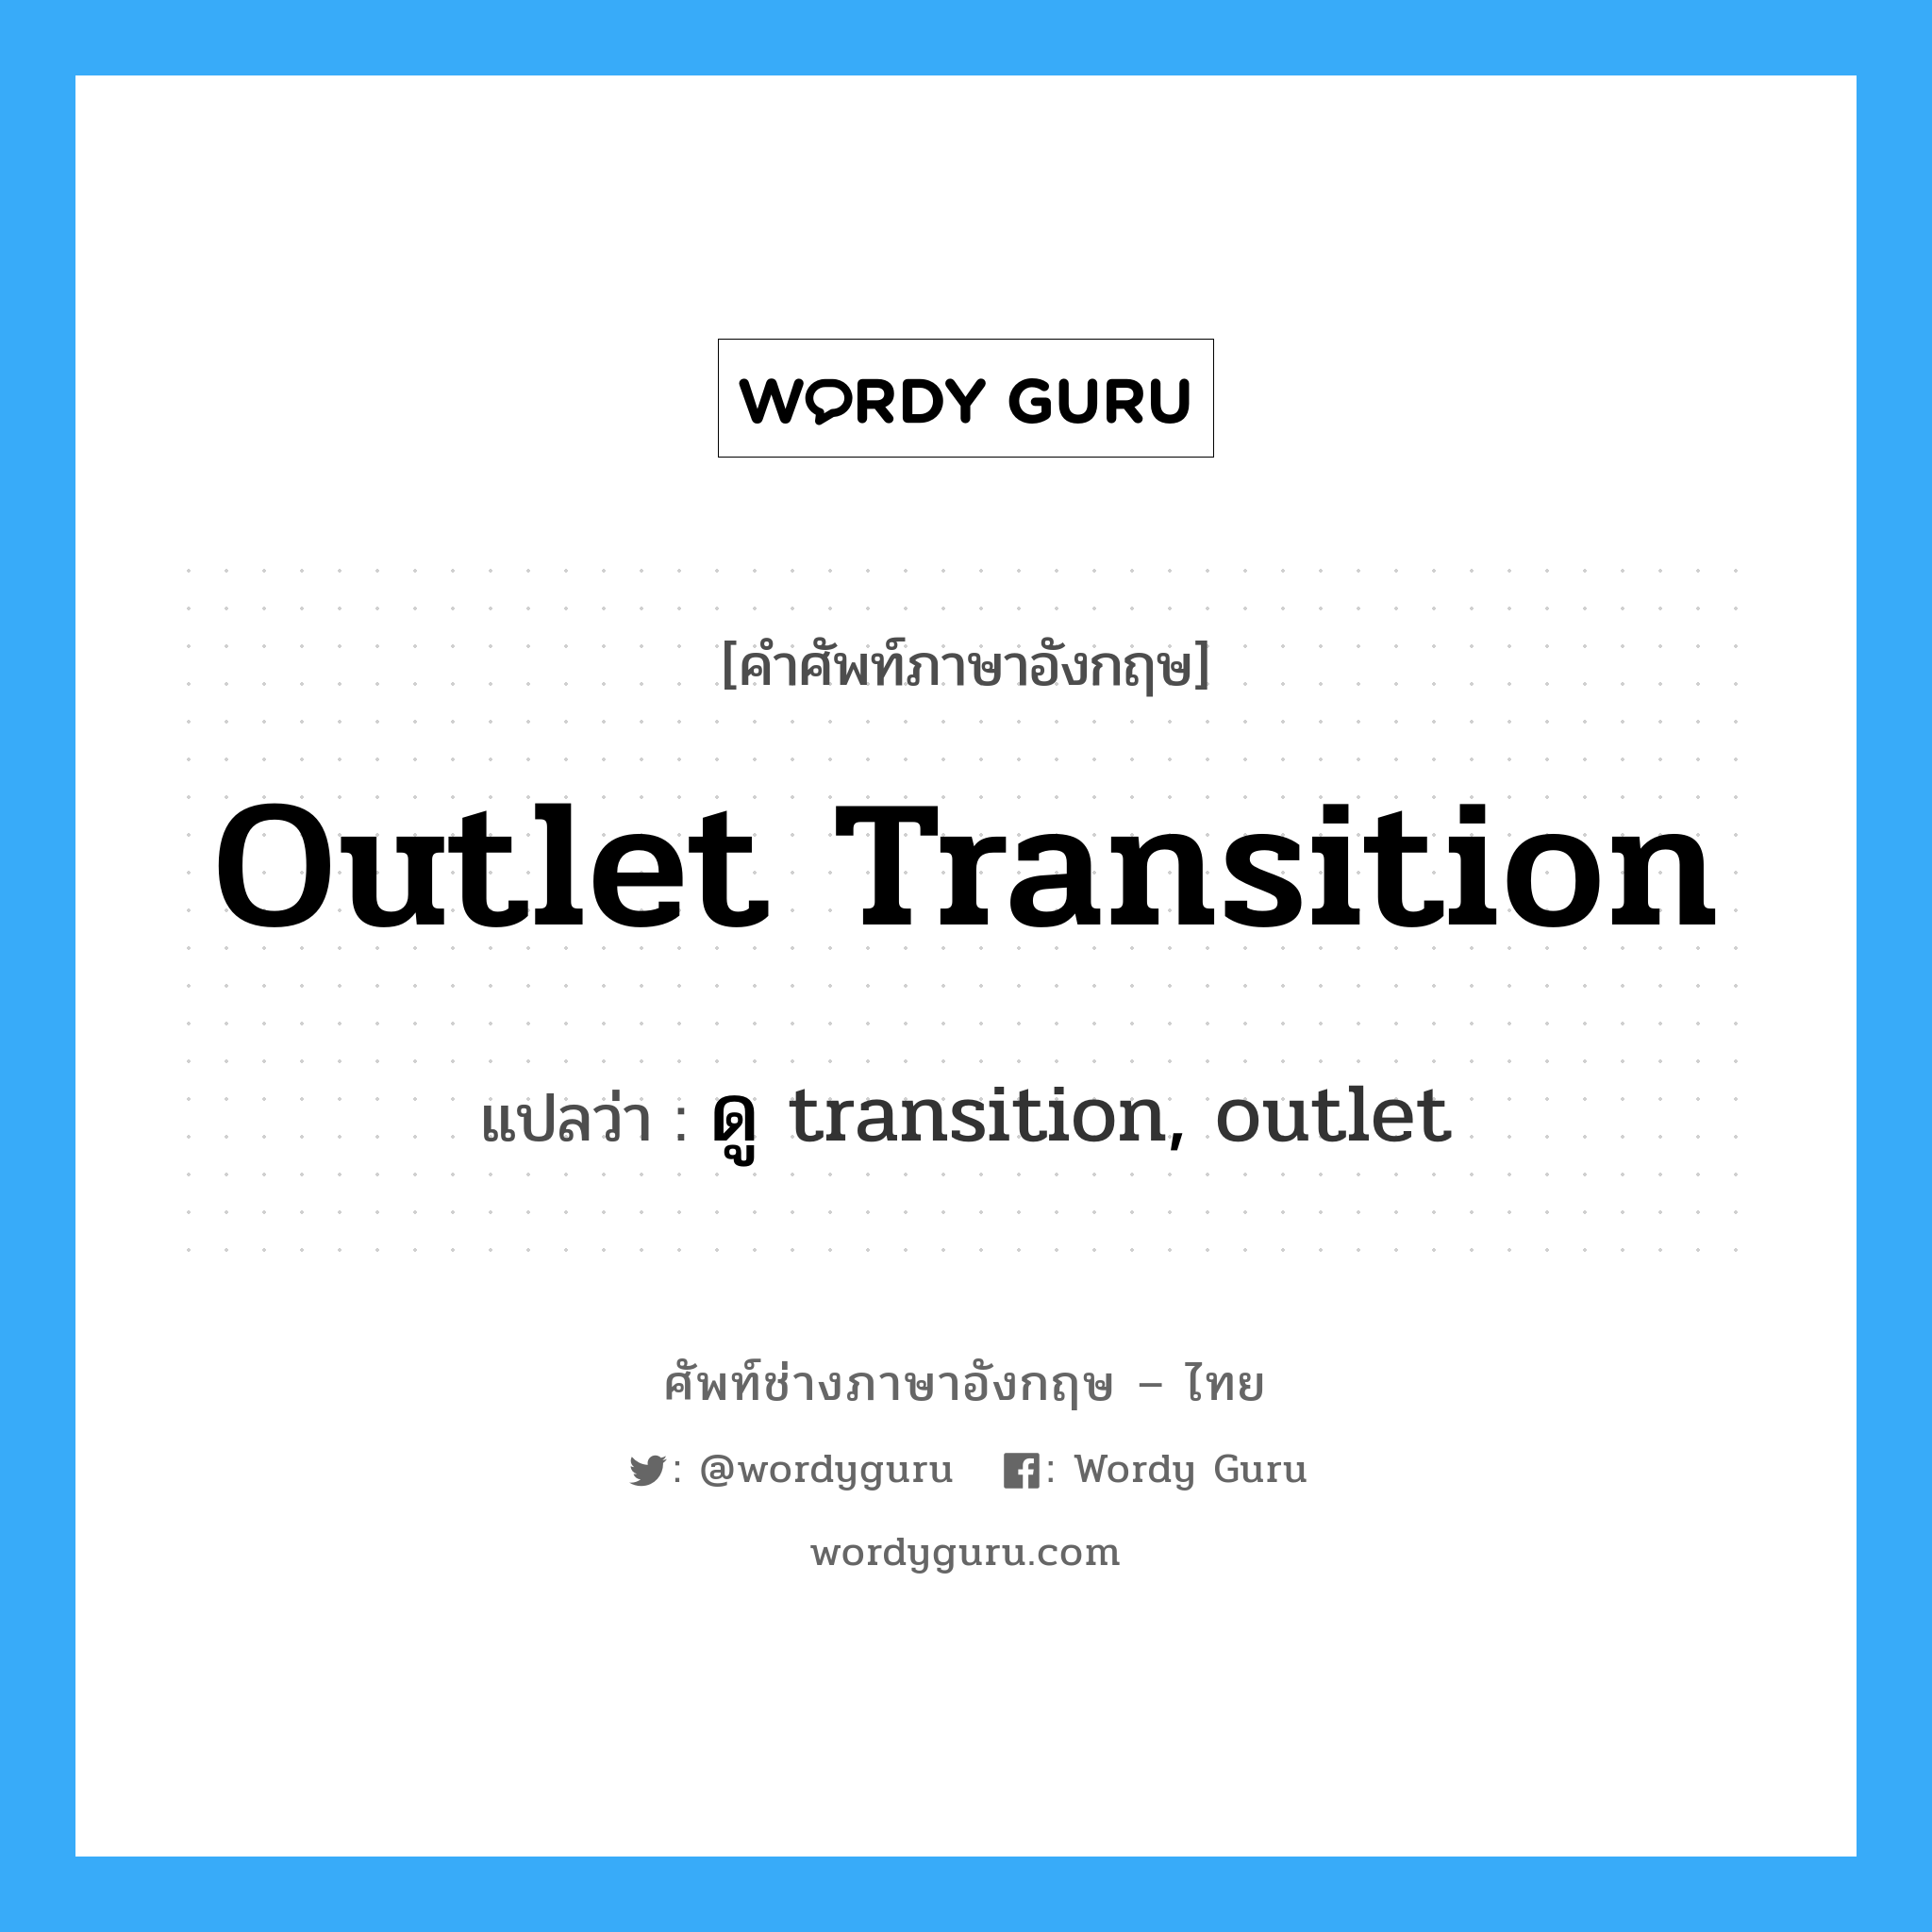 outlet transition แปลว่า?, คำศัพท์ช่างภาษาอังกฤษ - ไทย outlet transition คำศัพท์ภาษาอังกฤษ outlet transition แปลว่า ดู transition, outlet